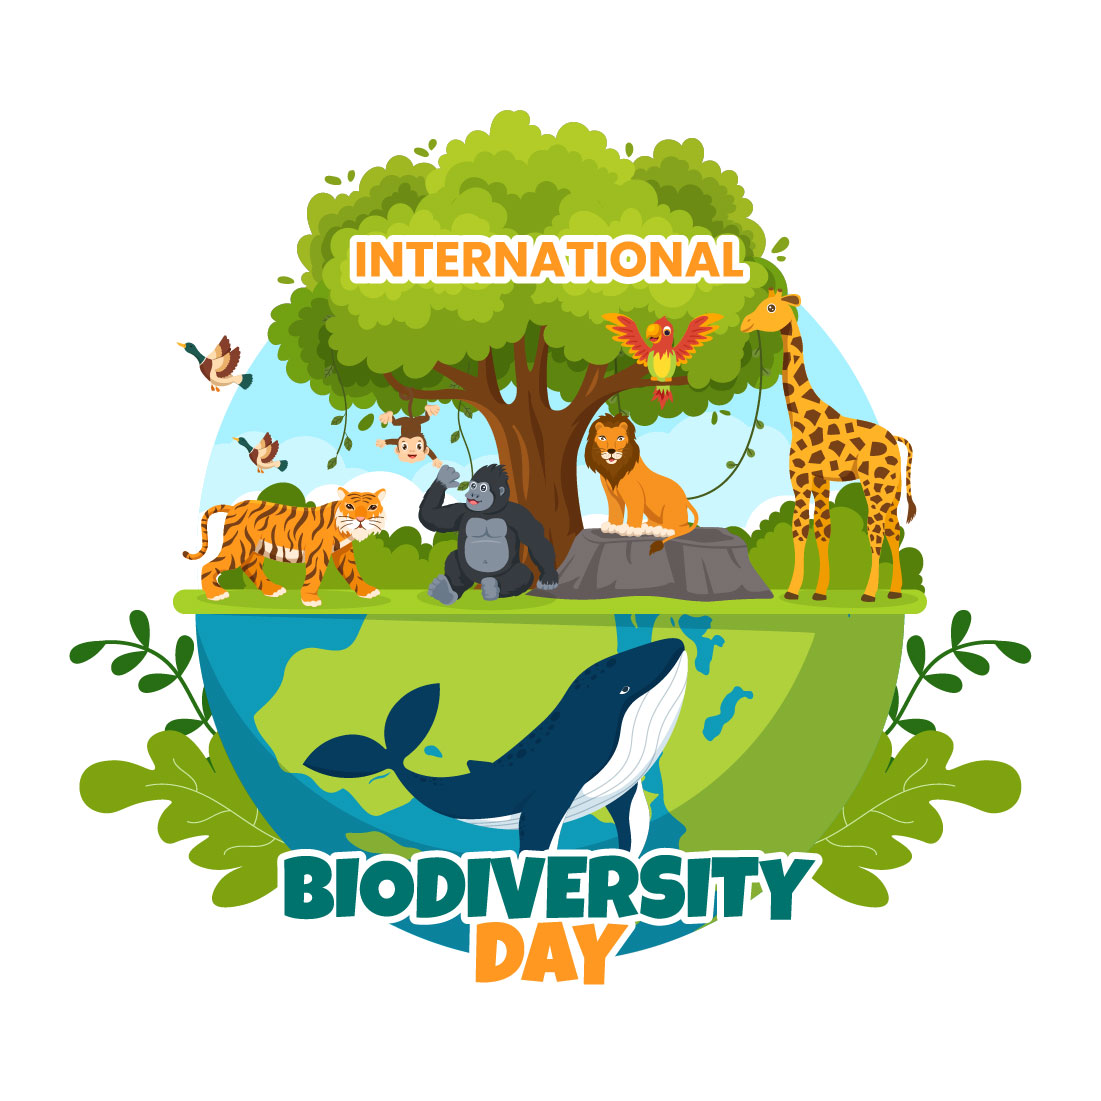 15 World Biodiversity Day Illustration cover image.